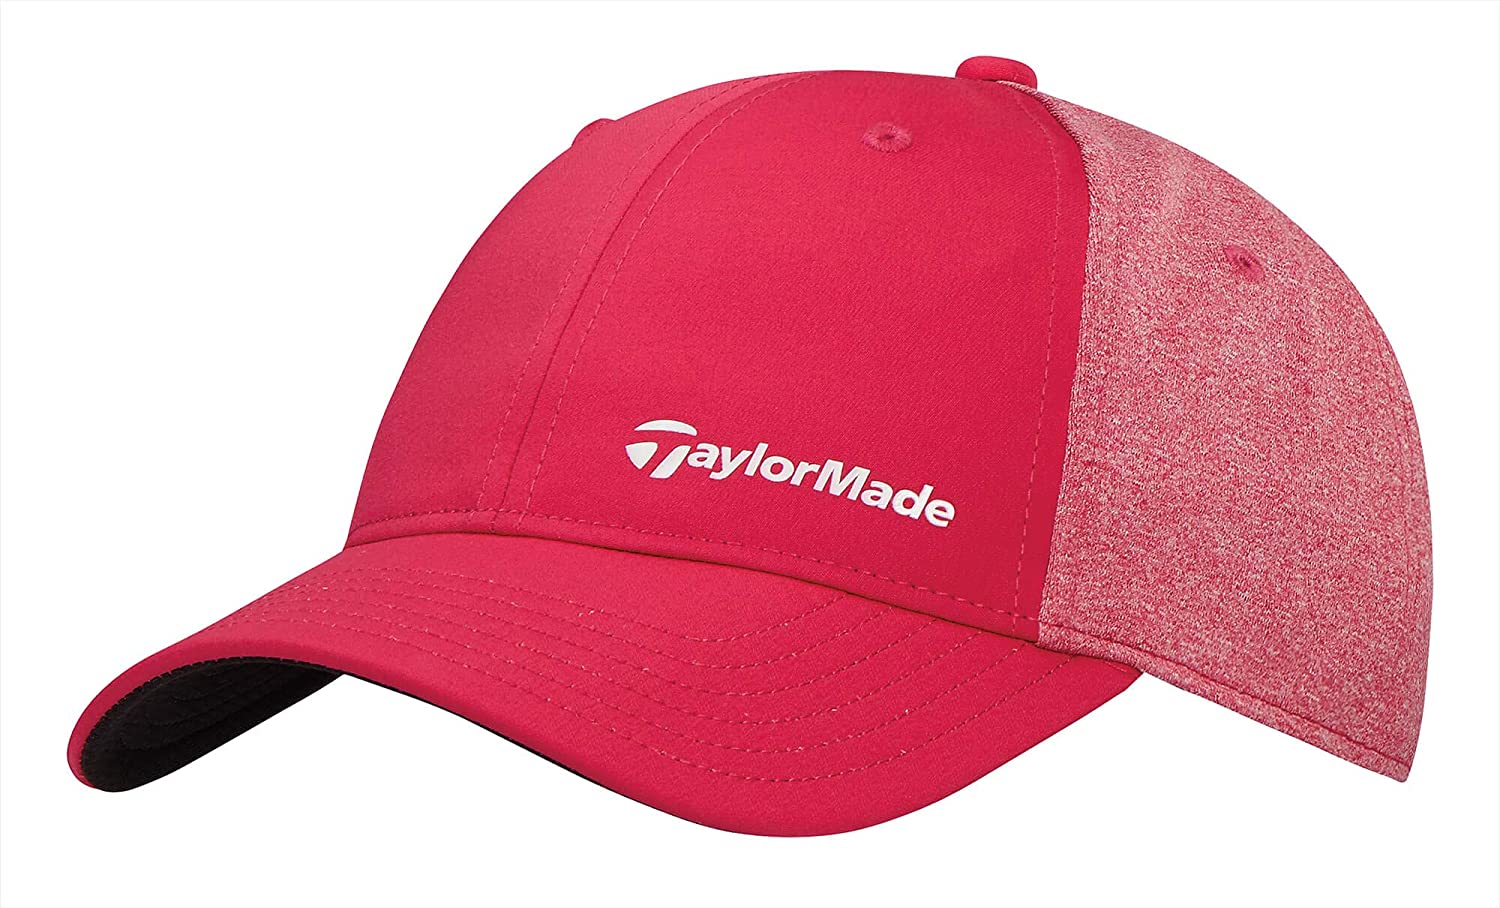 Womens Taylormade 2019 Fashion Golf Hats